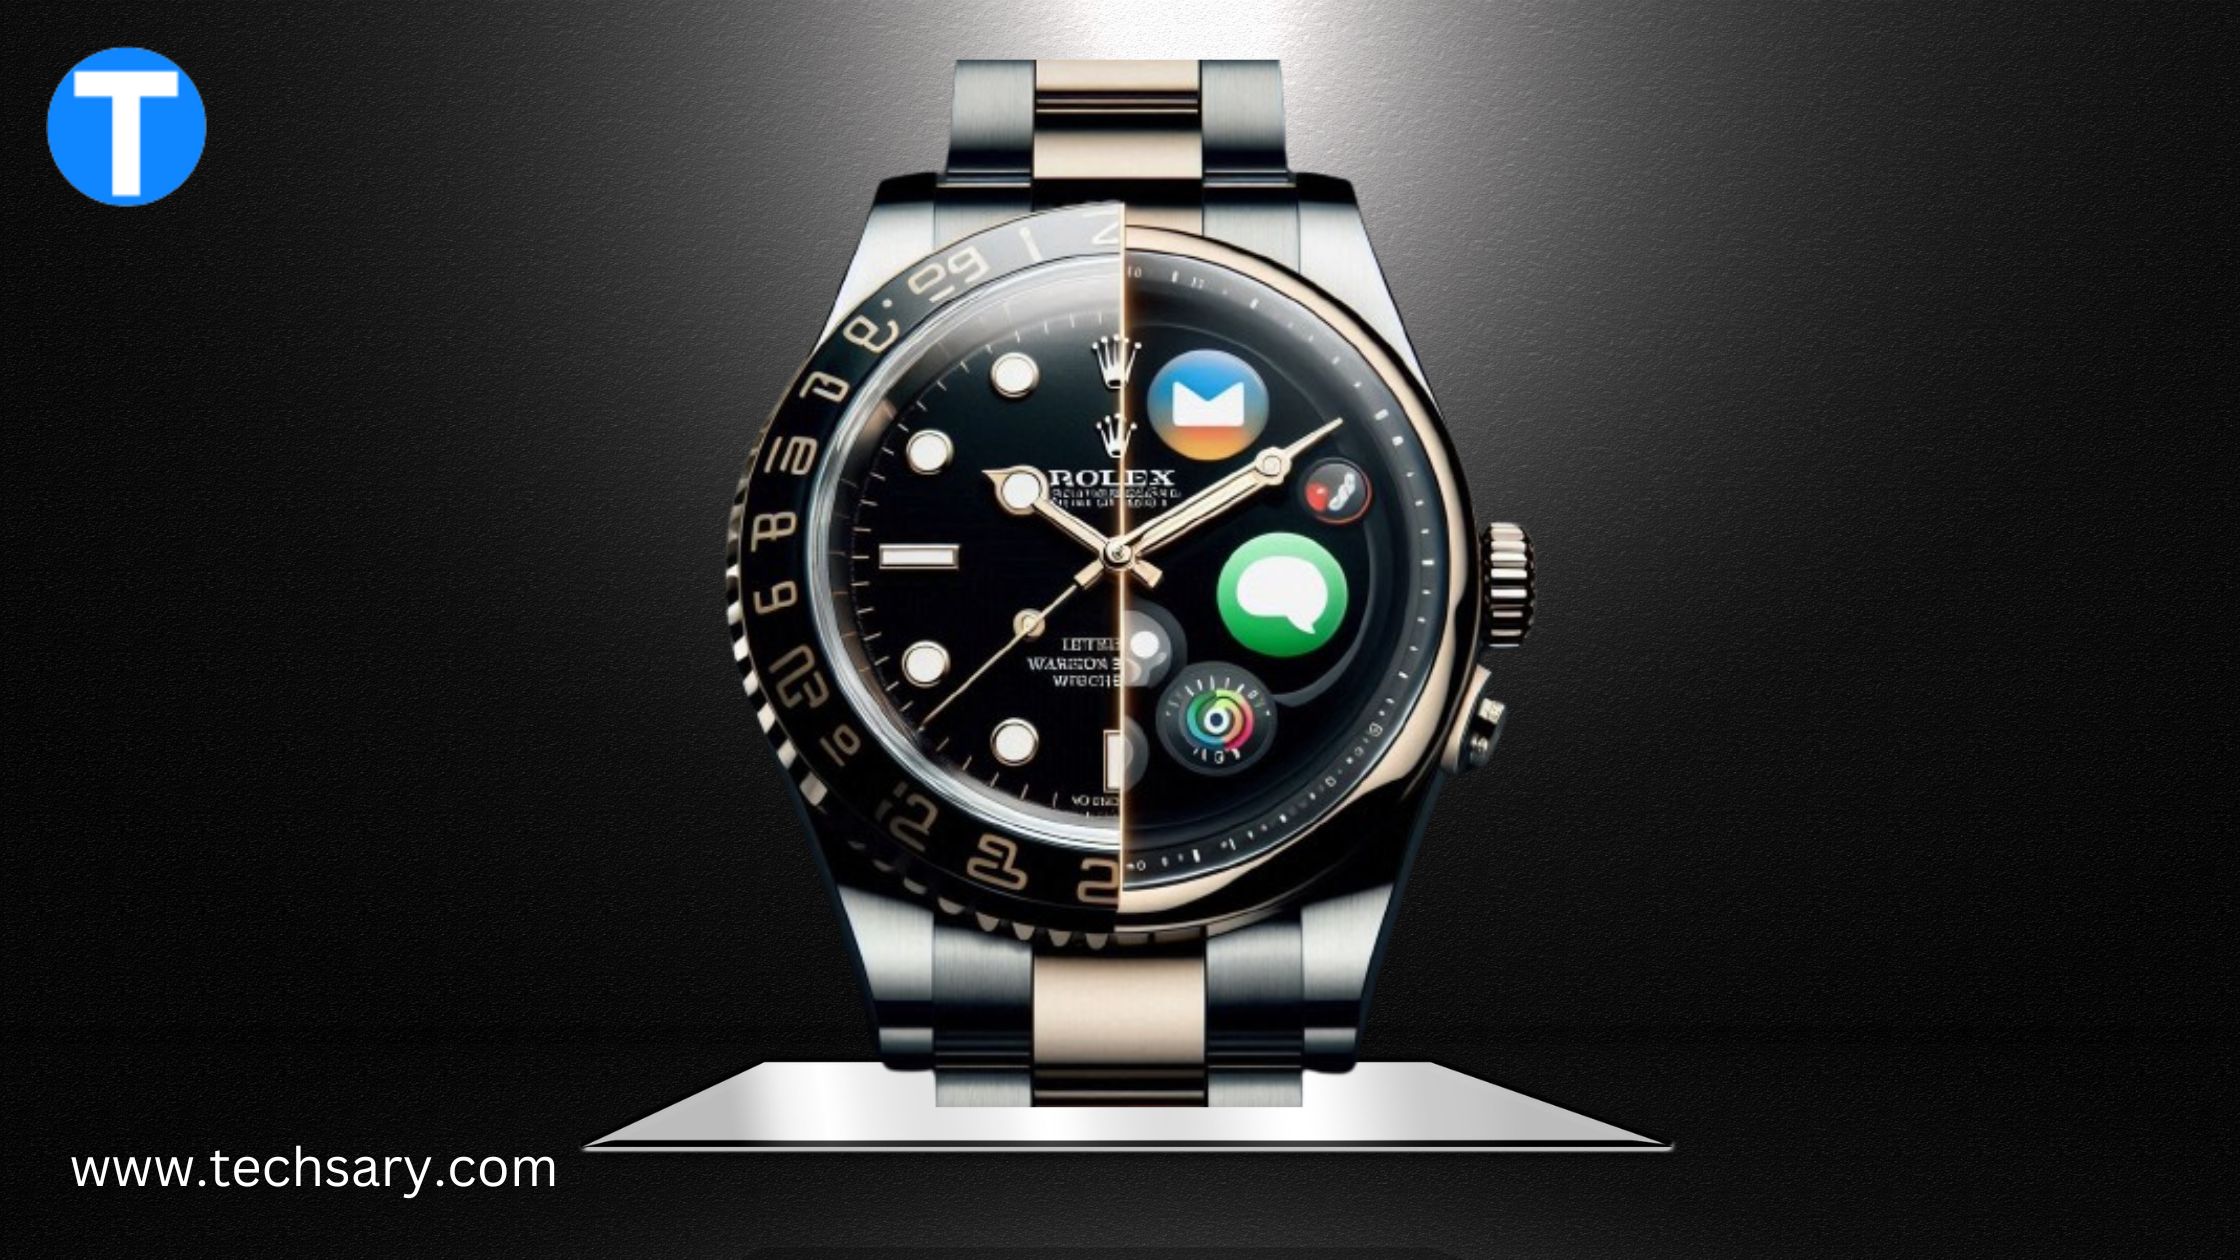 Will Rolex Make a Smartwatch